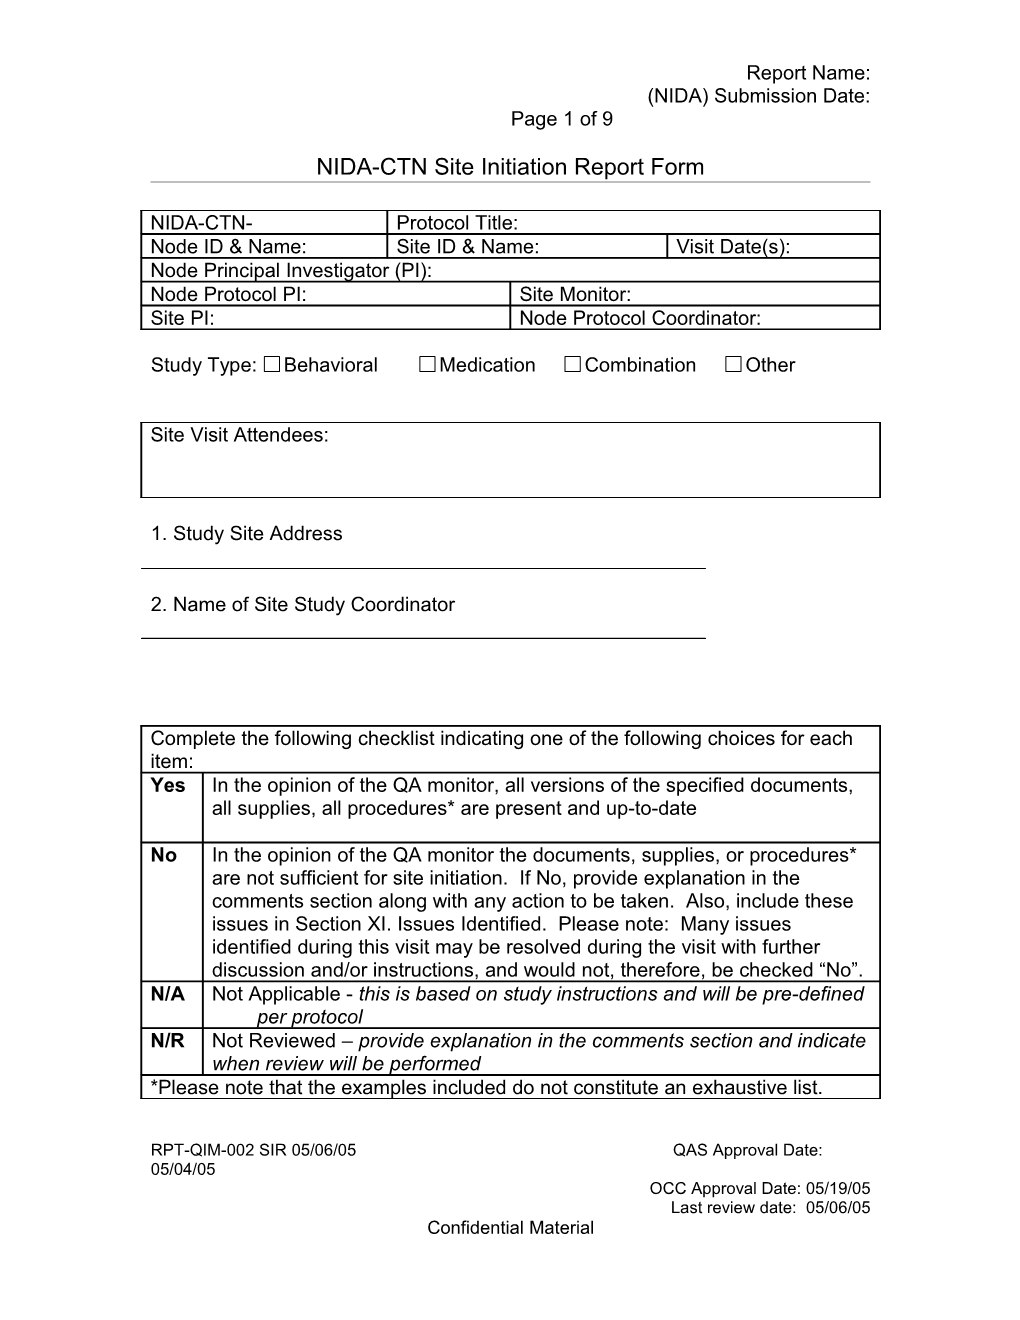 NIDA-CTN Site Initiation Report Form